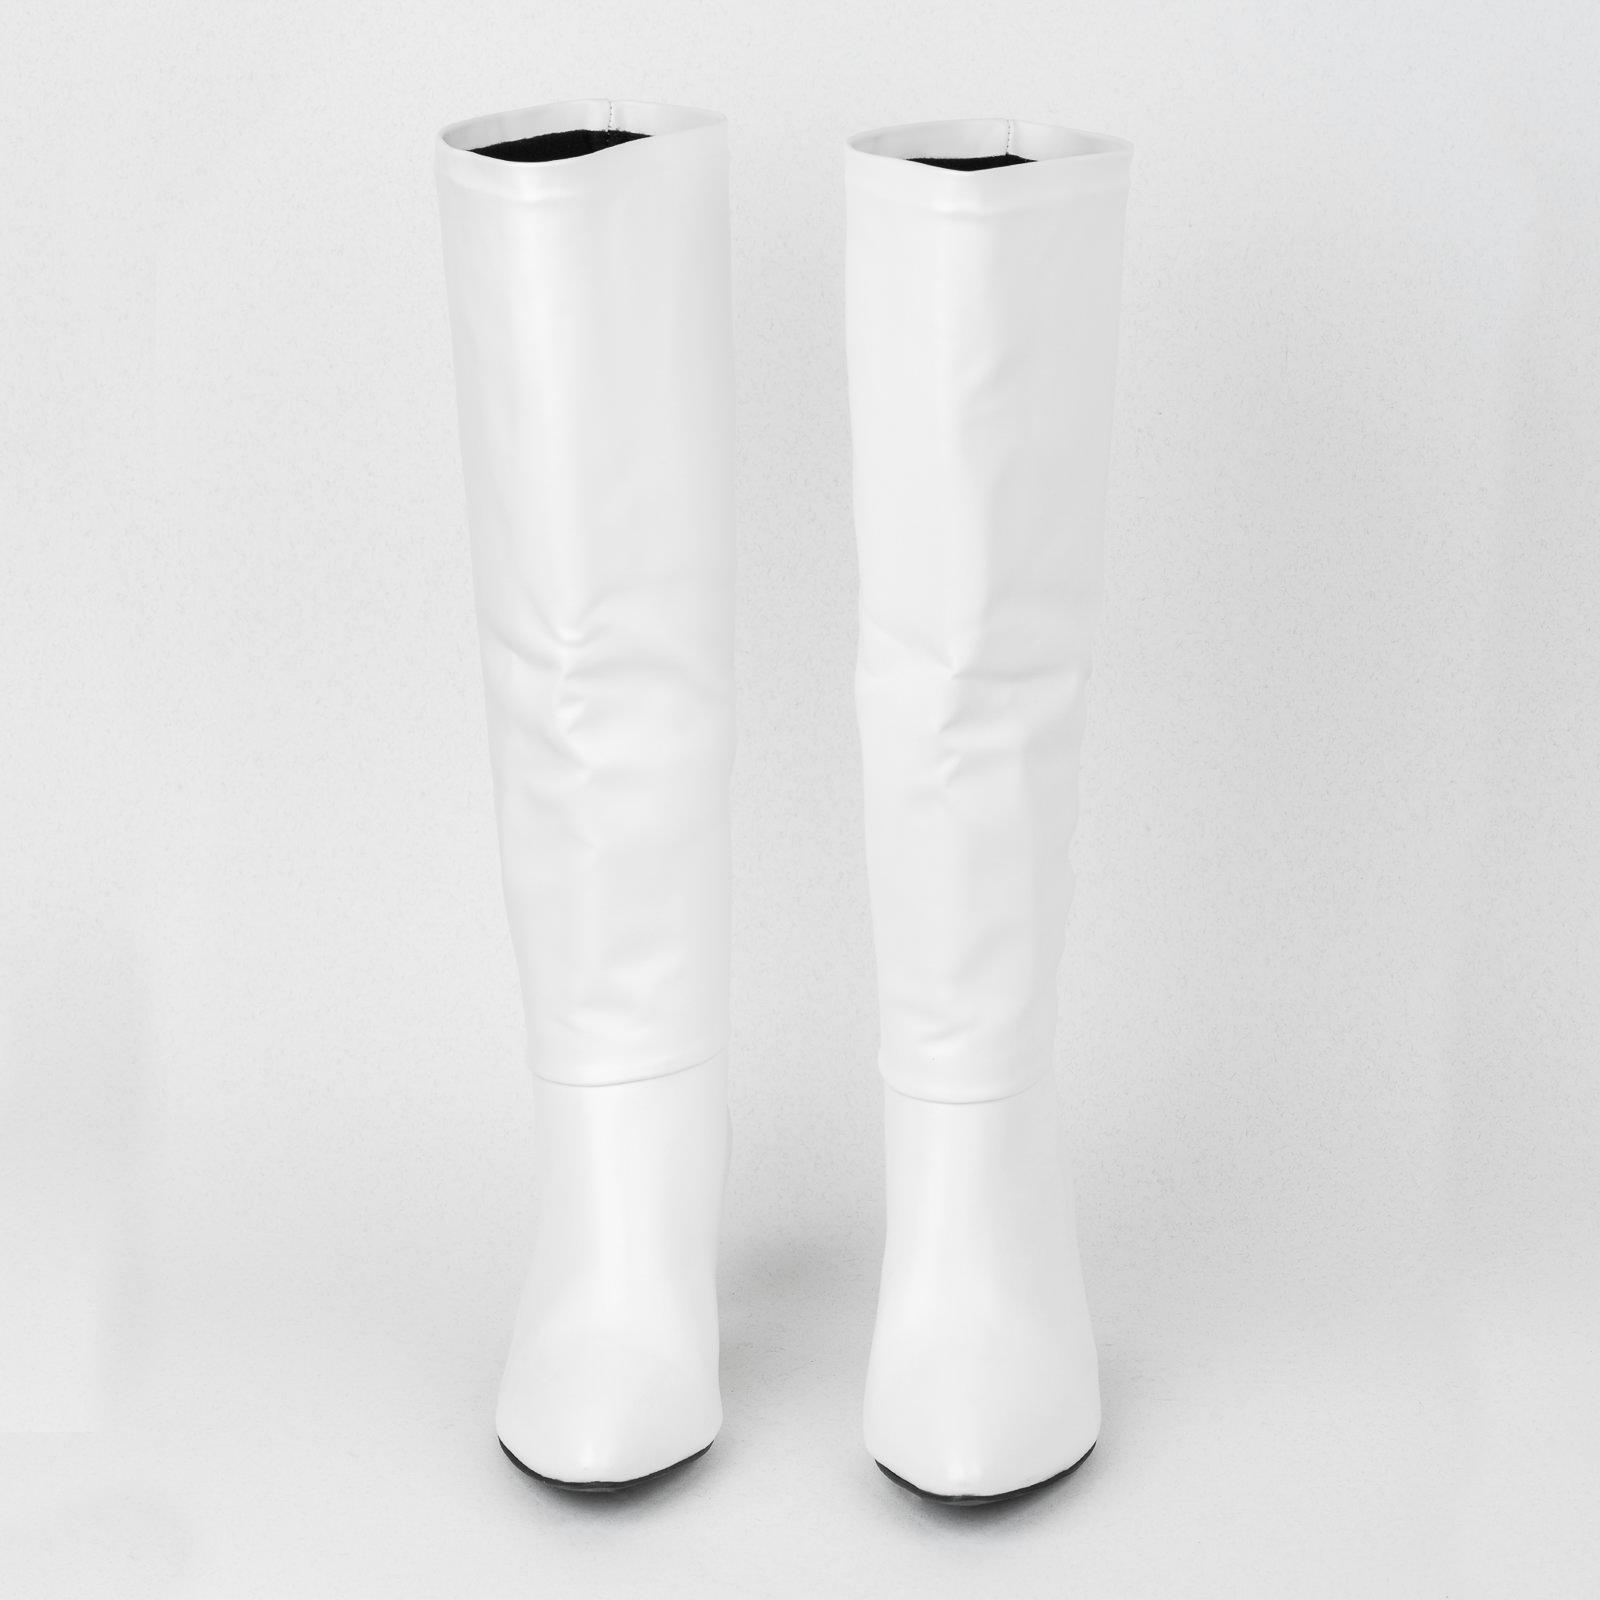 Women boots B464 - WHITE